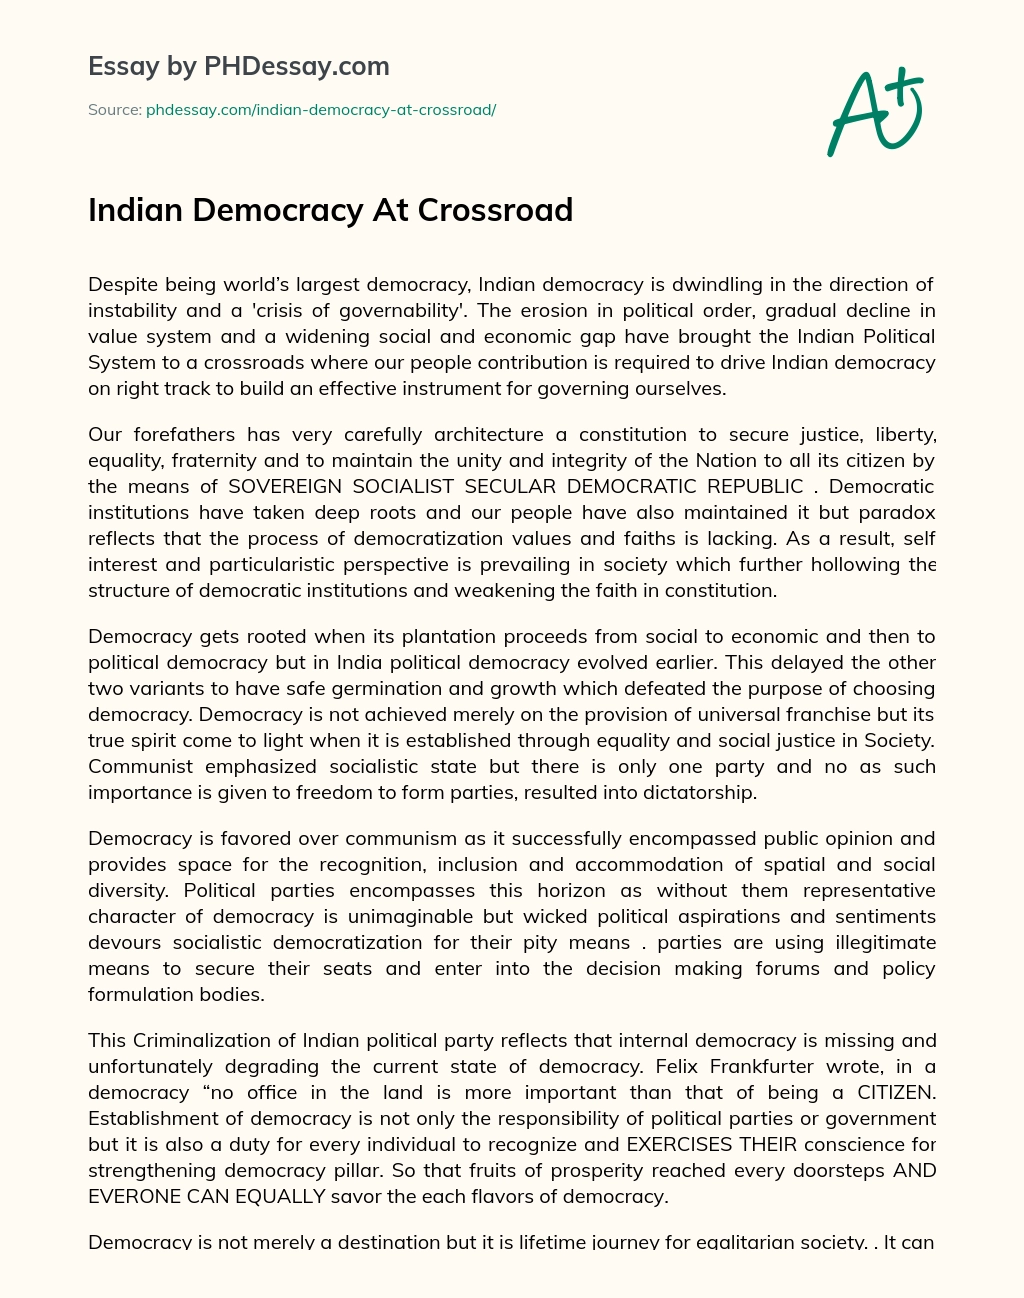 Indian Democracy At Crossroad essay